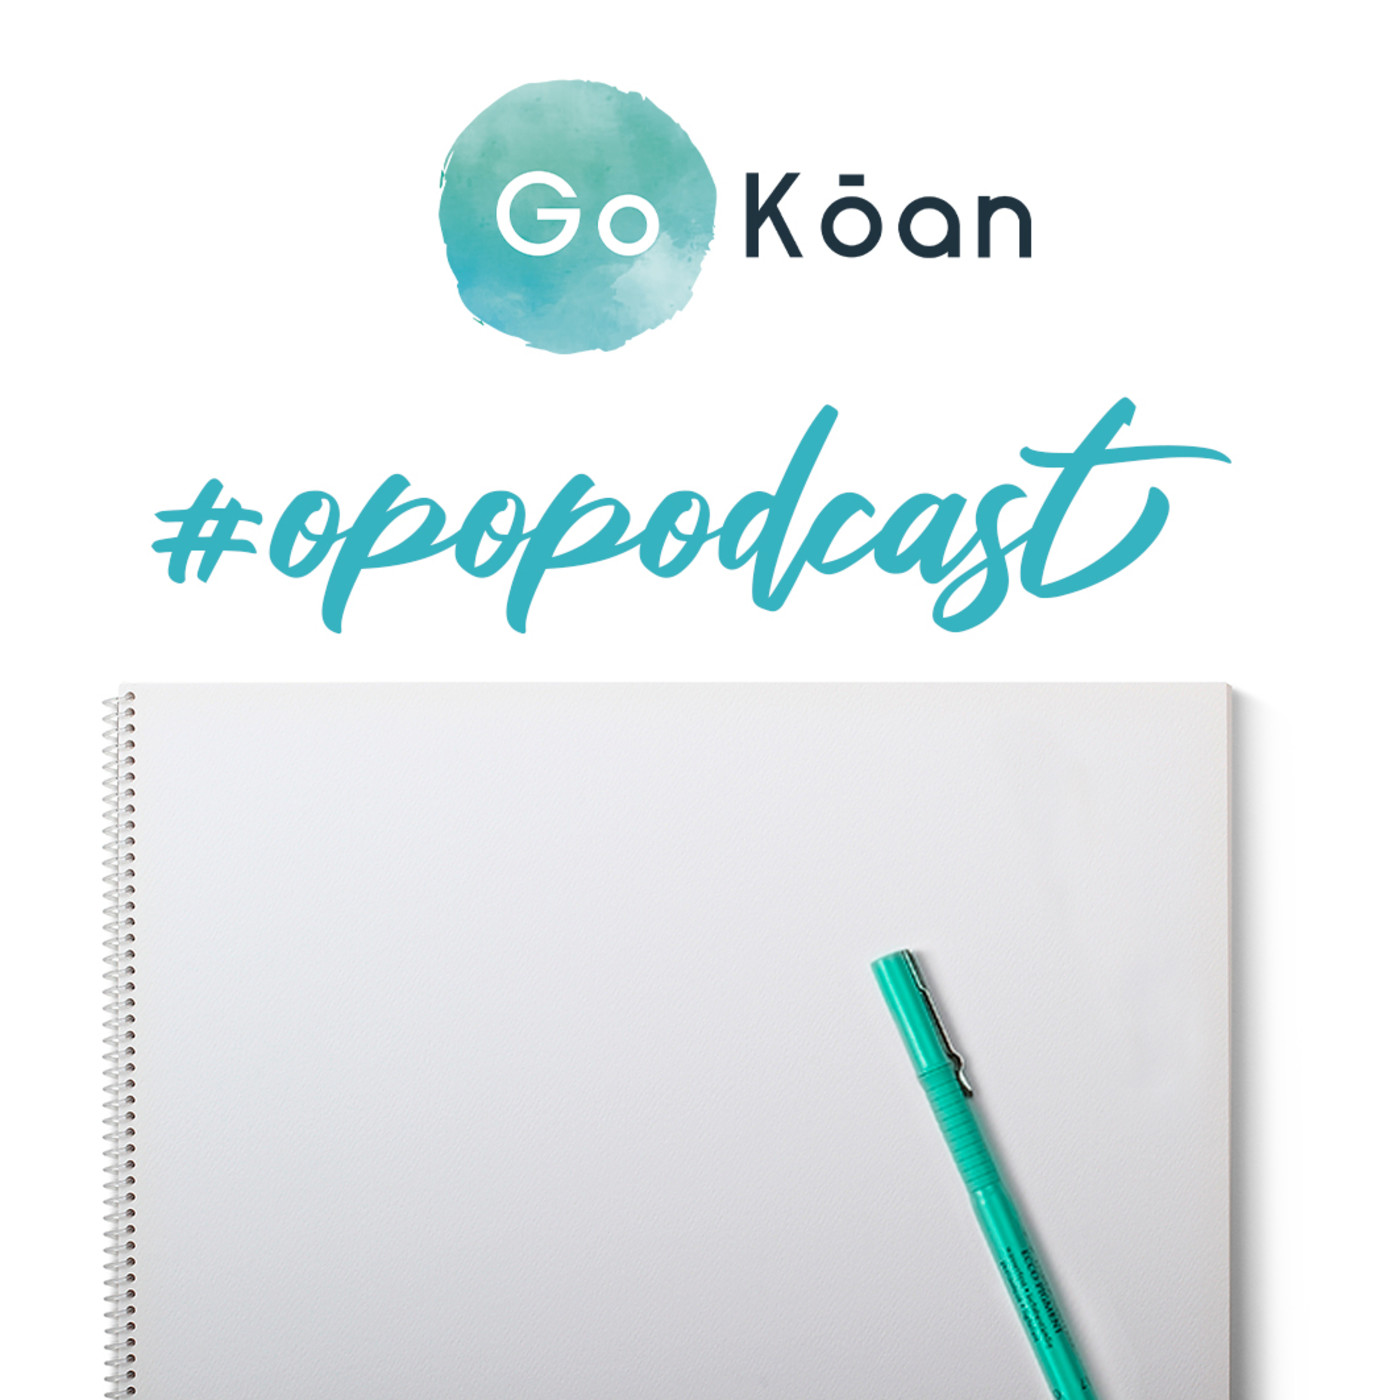 Podcast Oposiciones GoKoan